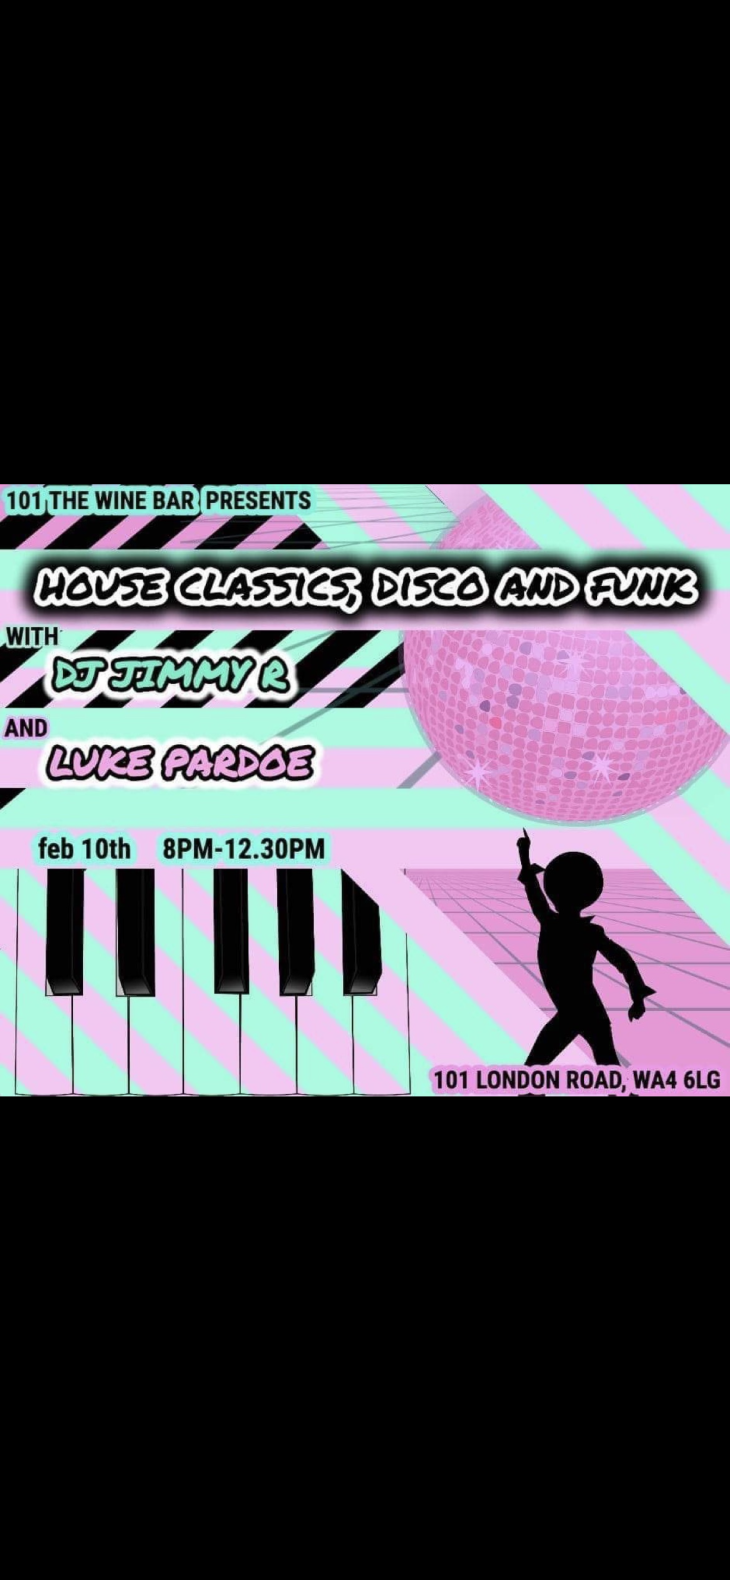 DJs house party disco funk